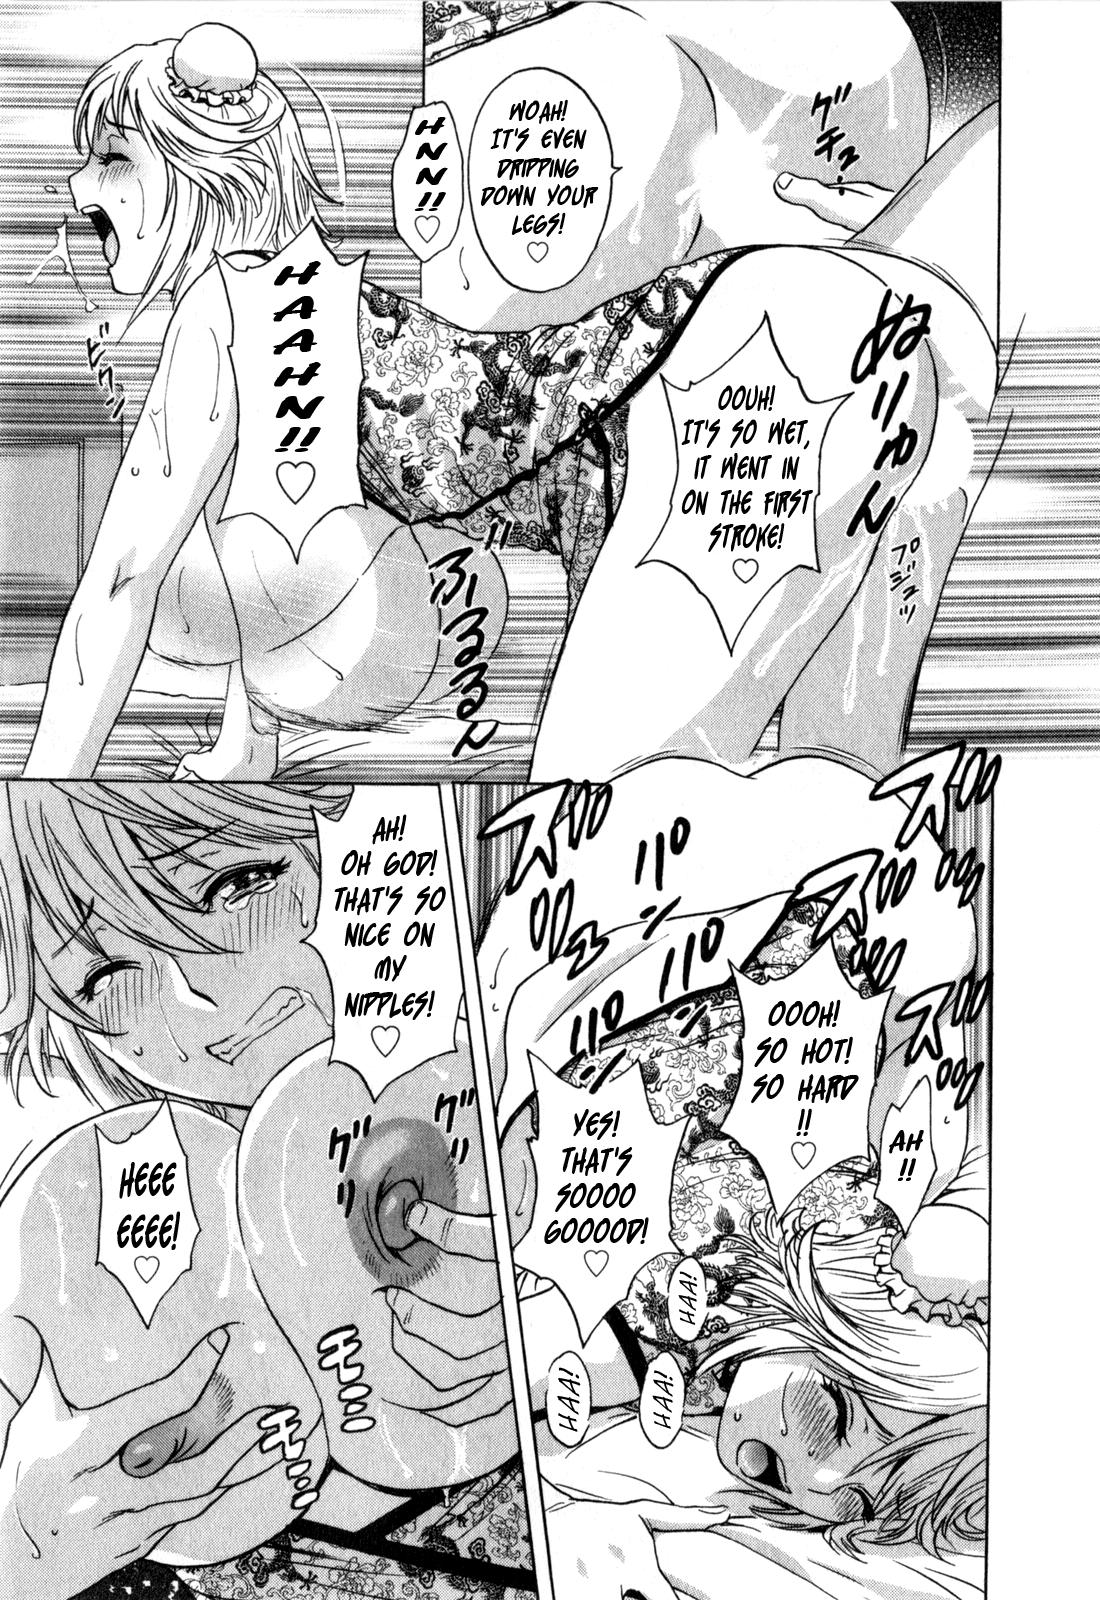 Life with Married Women Just Like a Manga 3 116